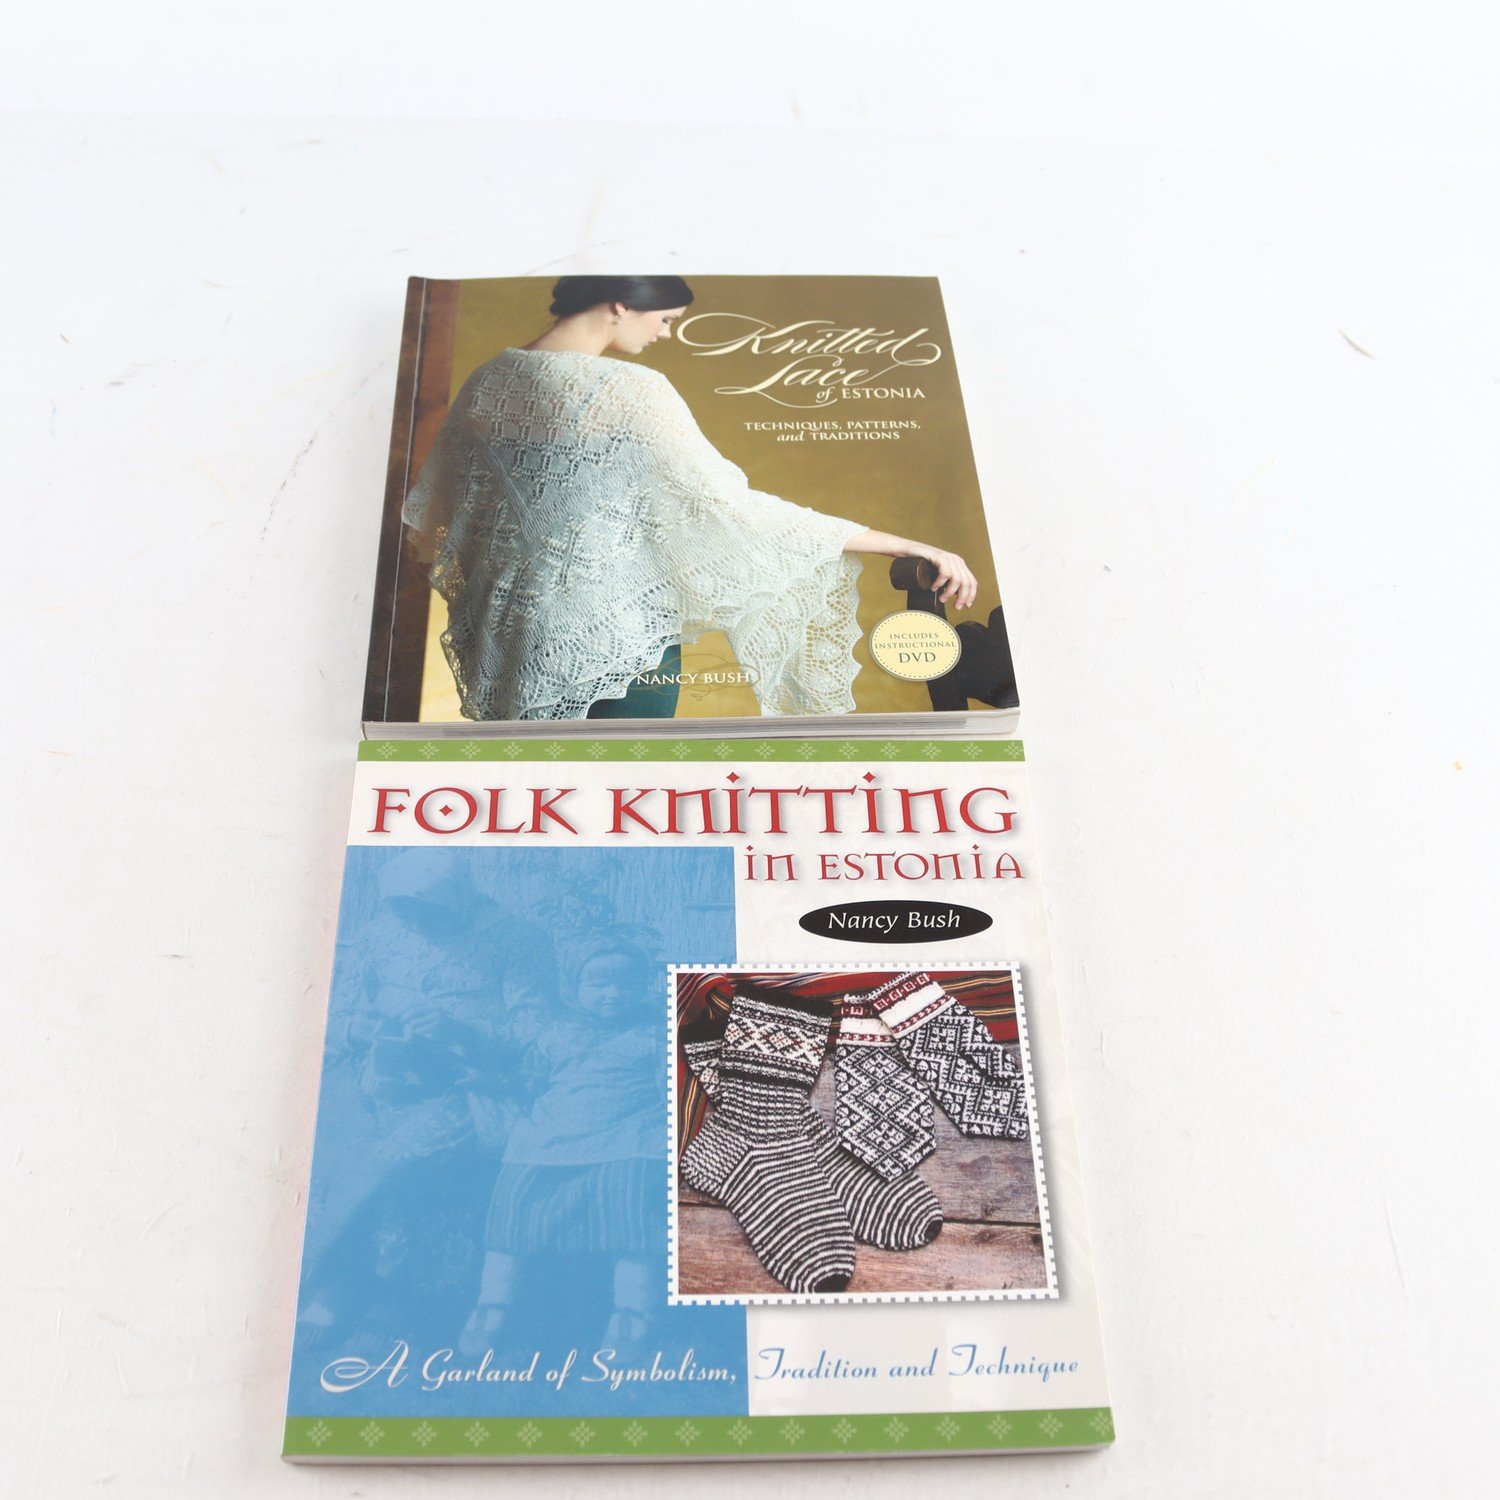 Knitted Lace of Estonia + Folk Knitting in Estonia, Nancy Bush